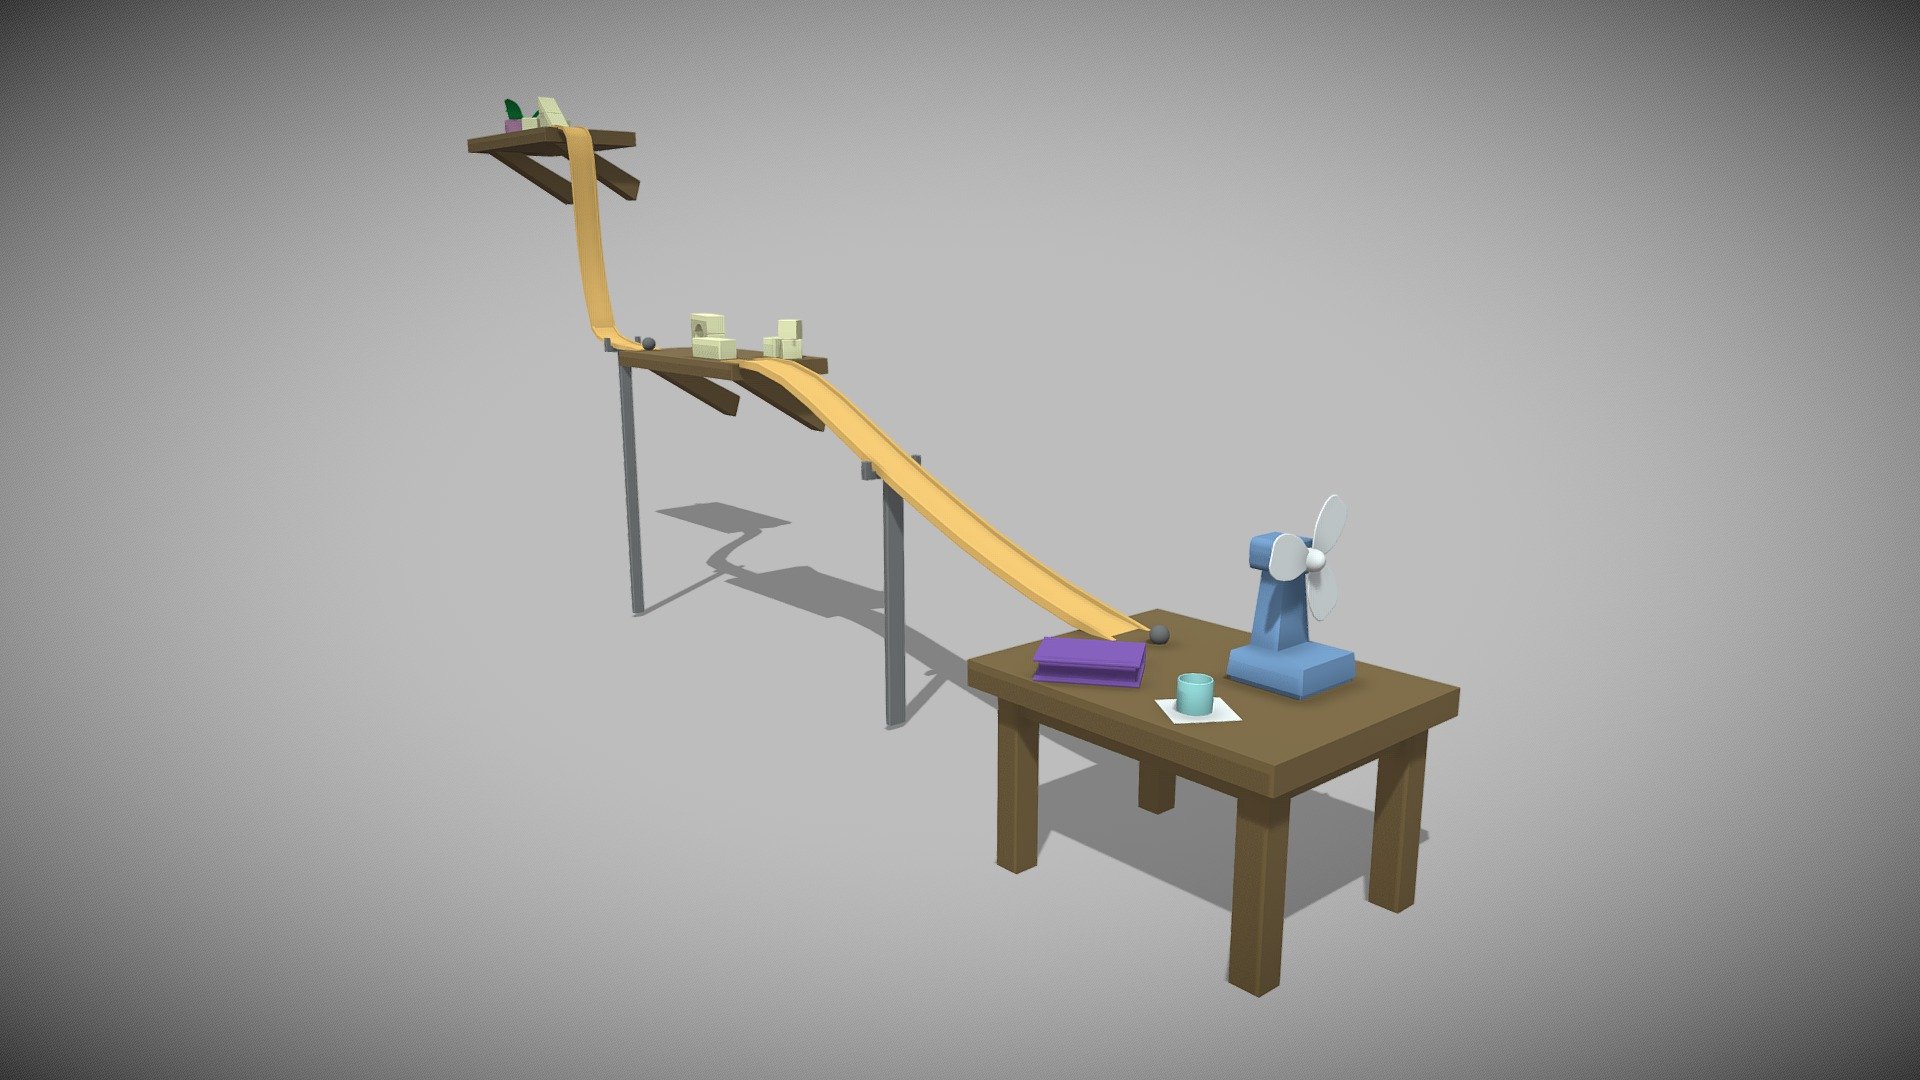 Rube Goldberg Machine 3d Animation 3d Model By Loganpomper 08abbc4